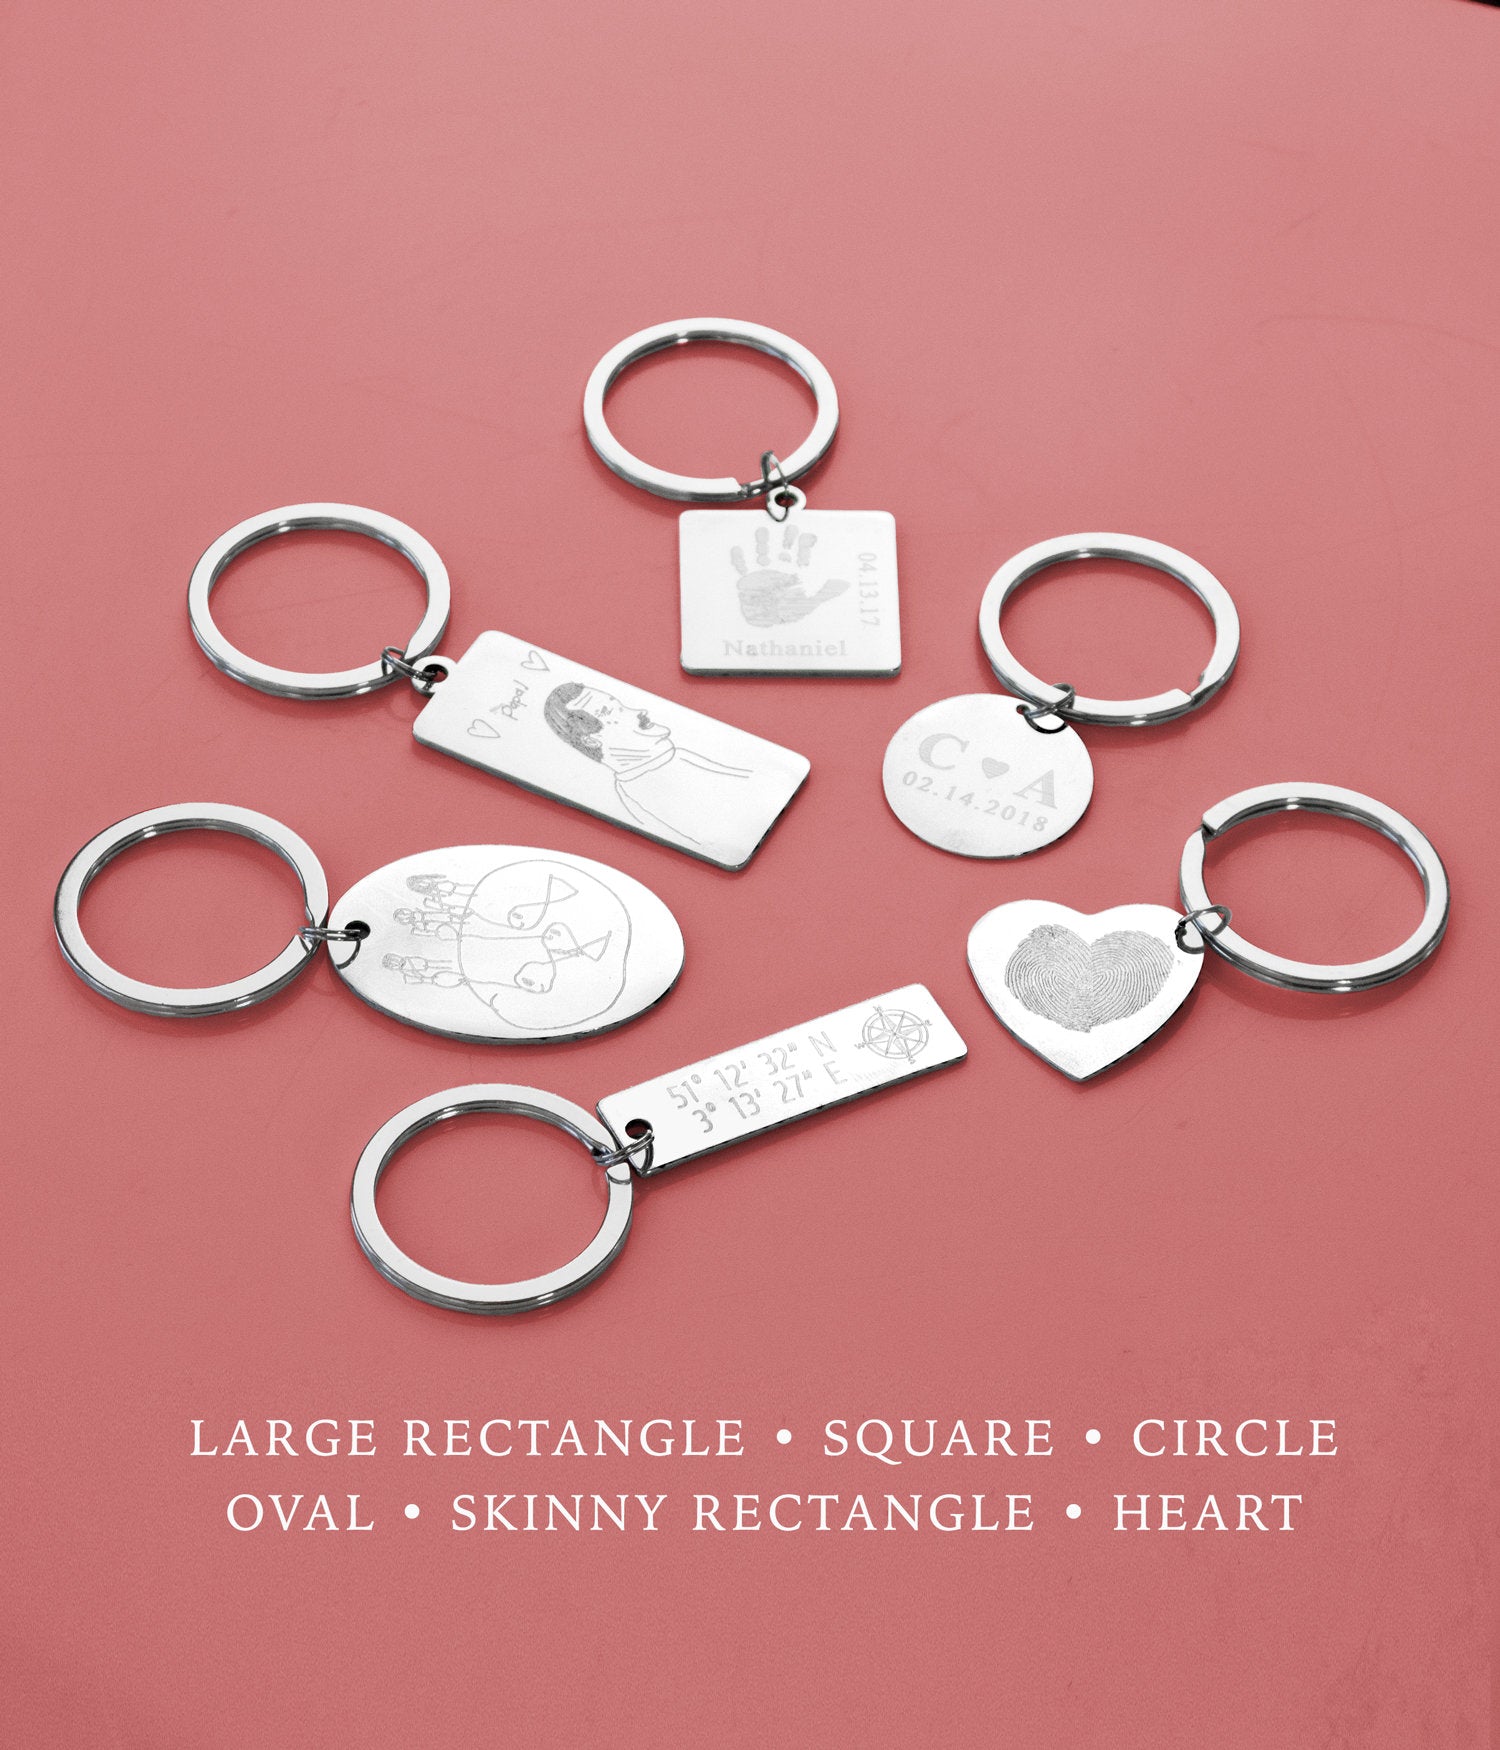 Danique Jewelry Personalized Monogram Keychain